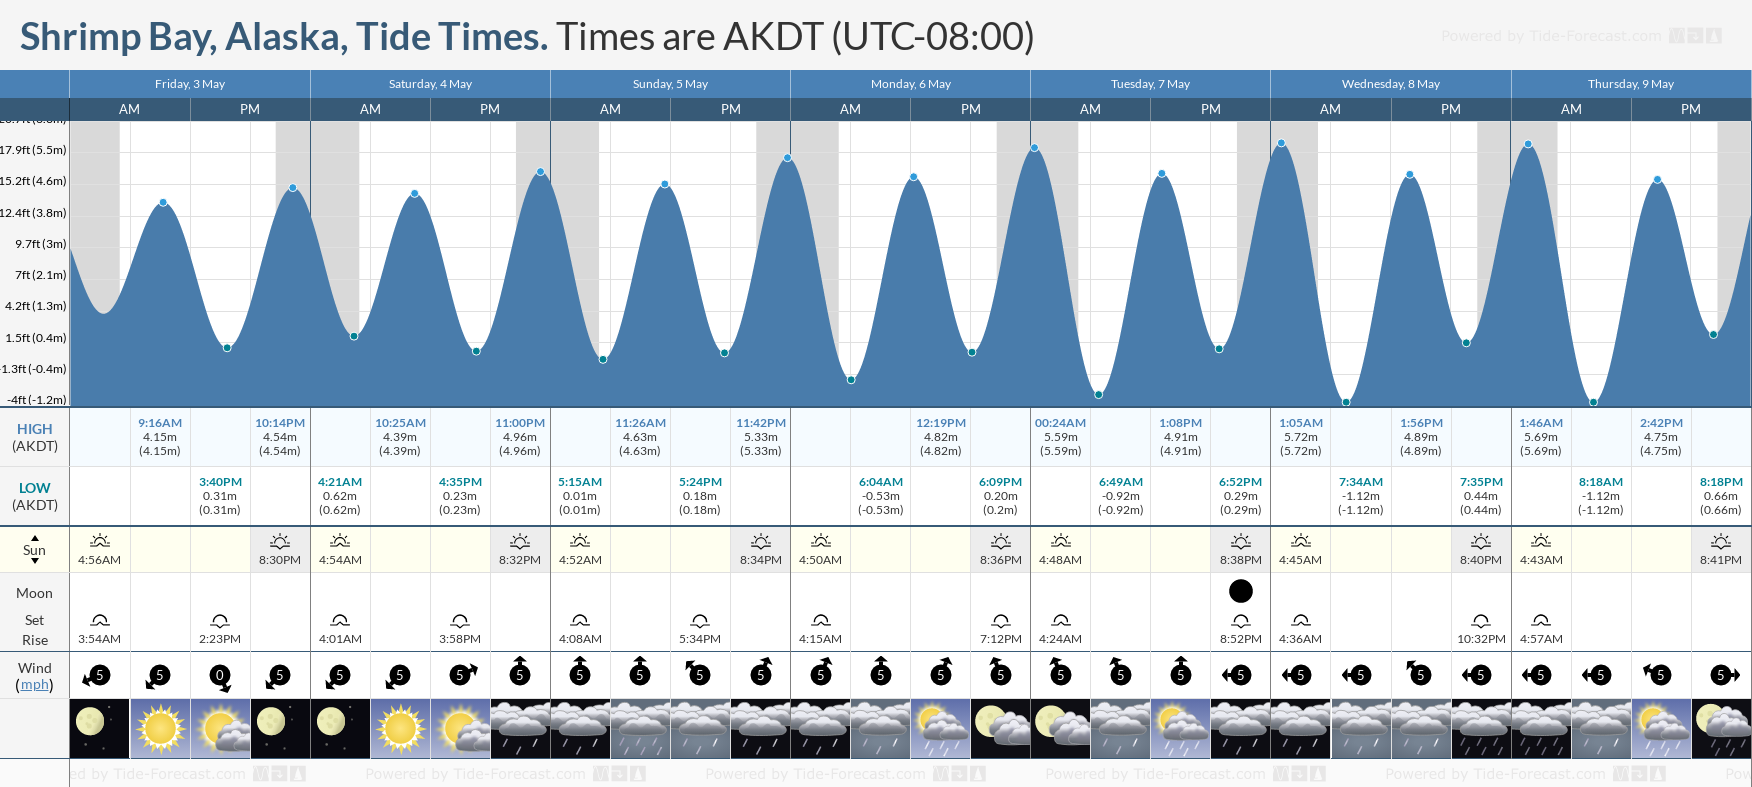 Shrimp Bay, Alaska Tide Chart including high and low tide tide times for the next 7 days